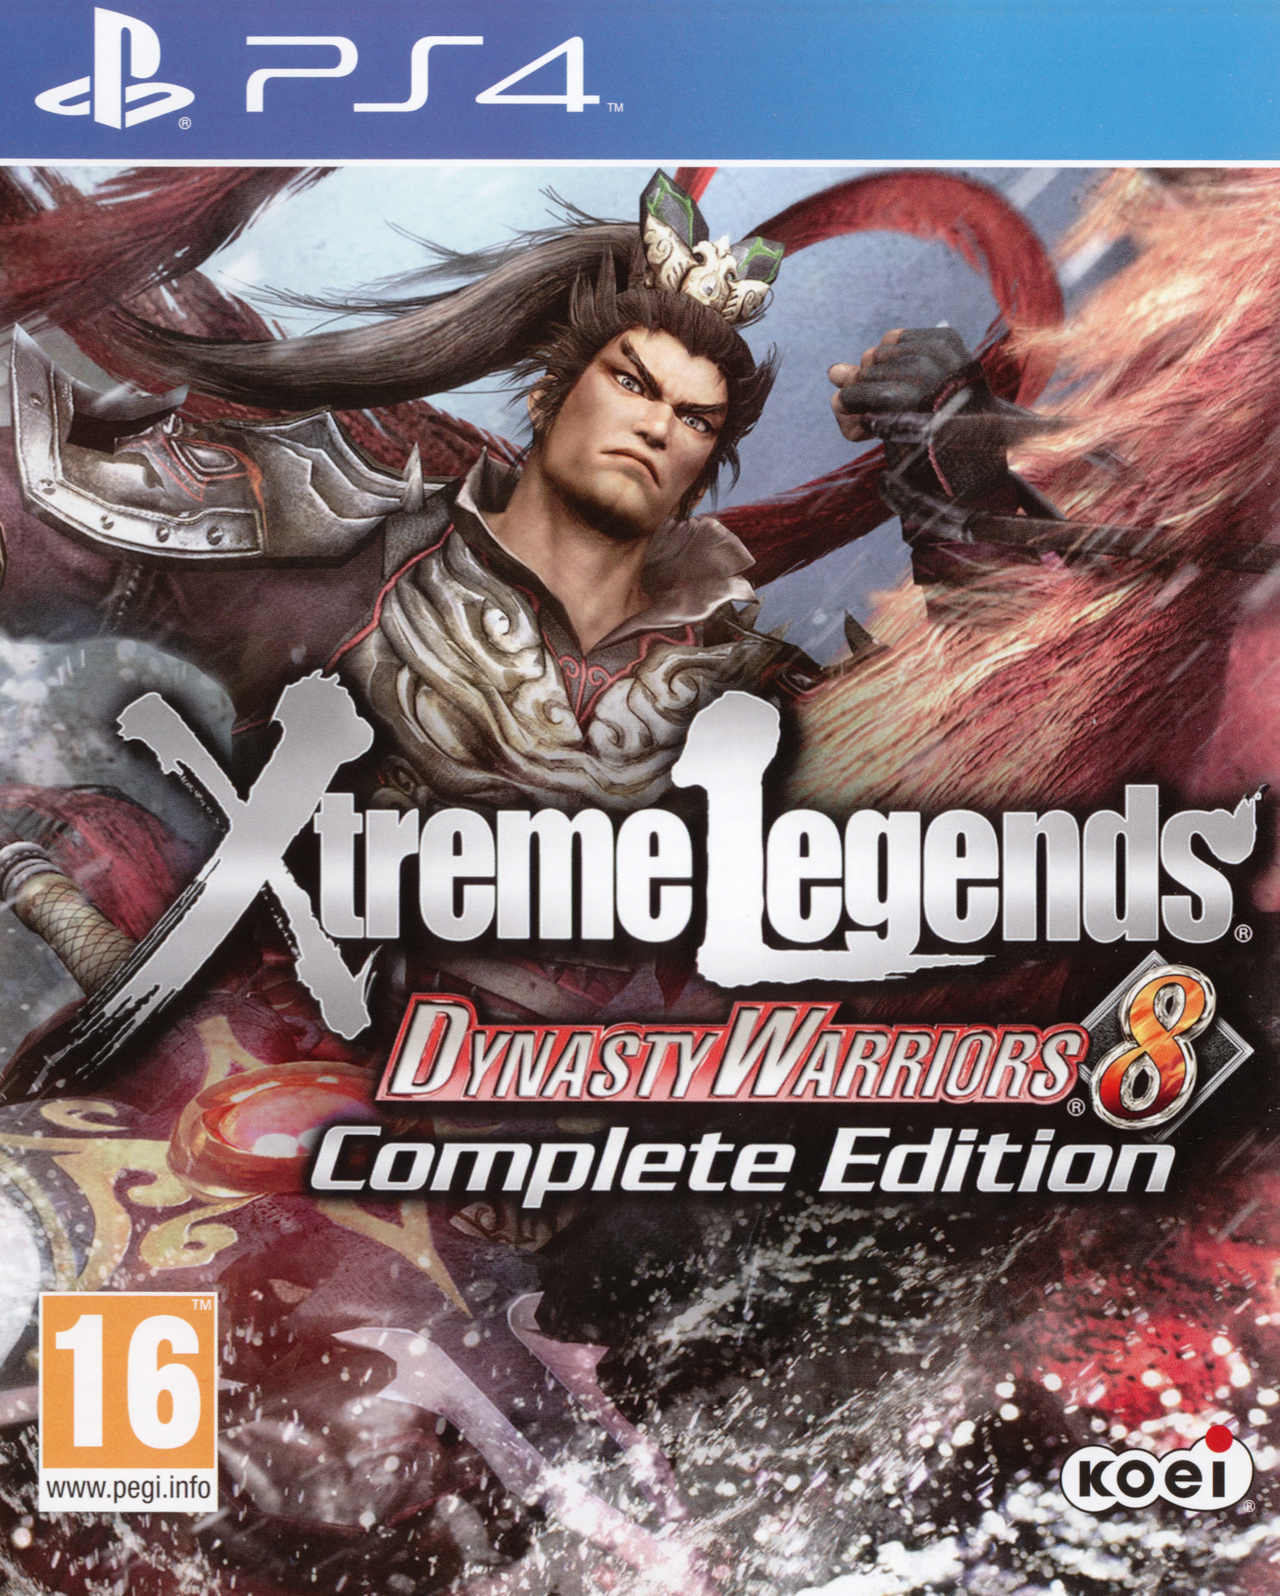 Dynasty Warriors 8 Xtreme Legends HD wallpapers, Desktop wallpaper - most viewed